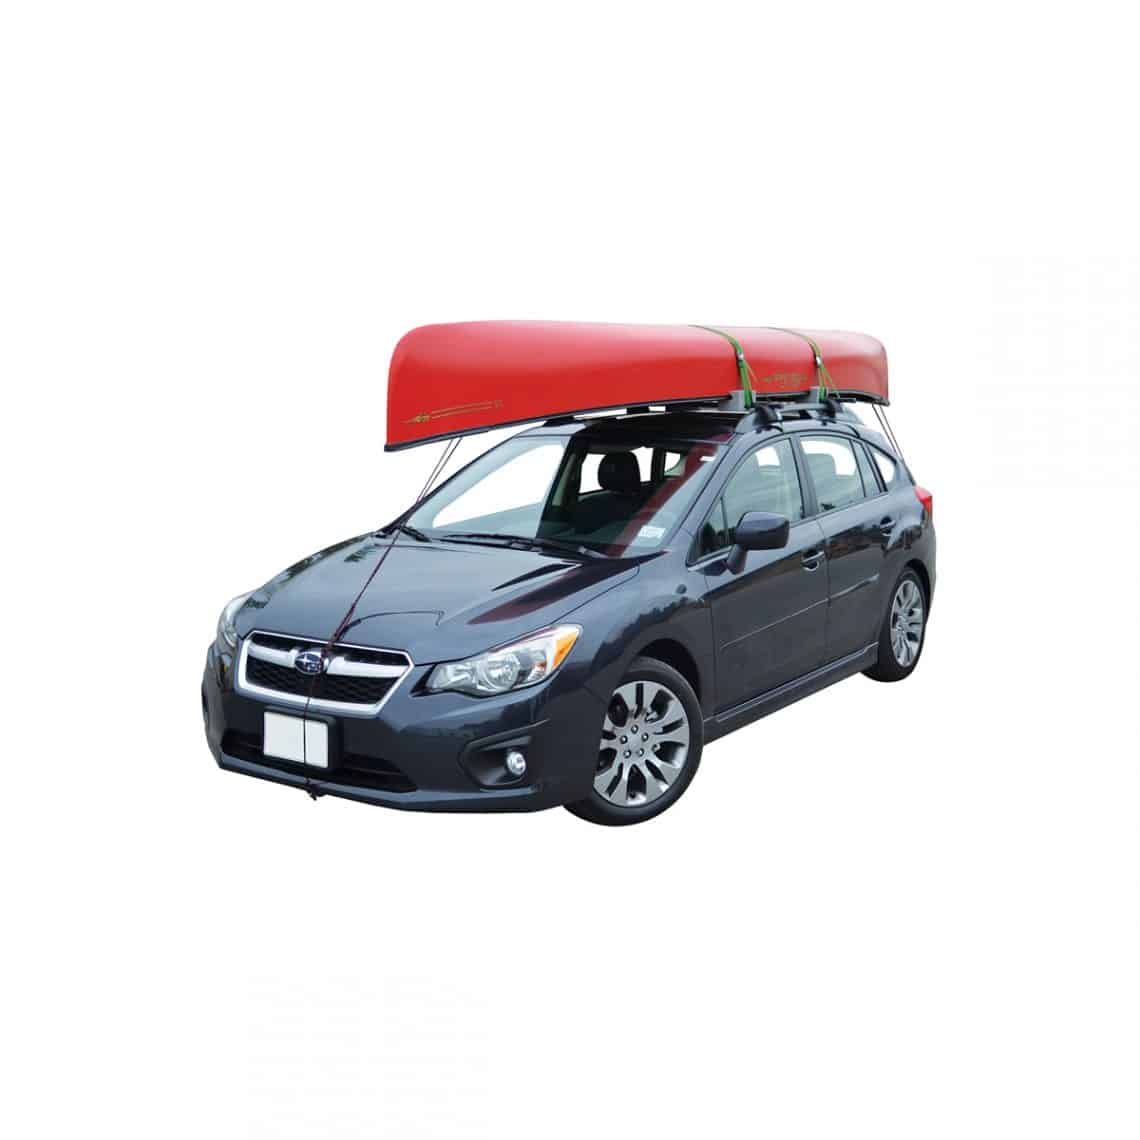 kayak carrier kit – foamtech